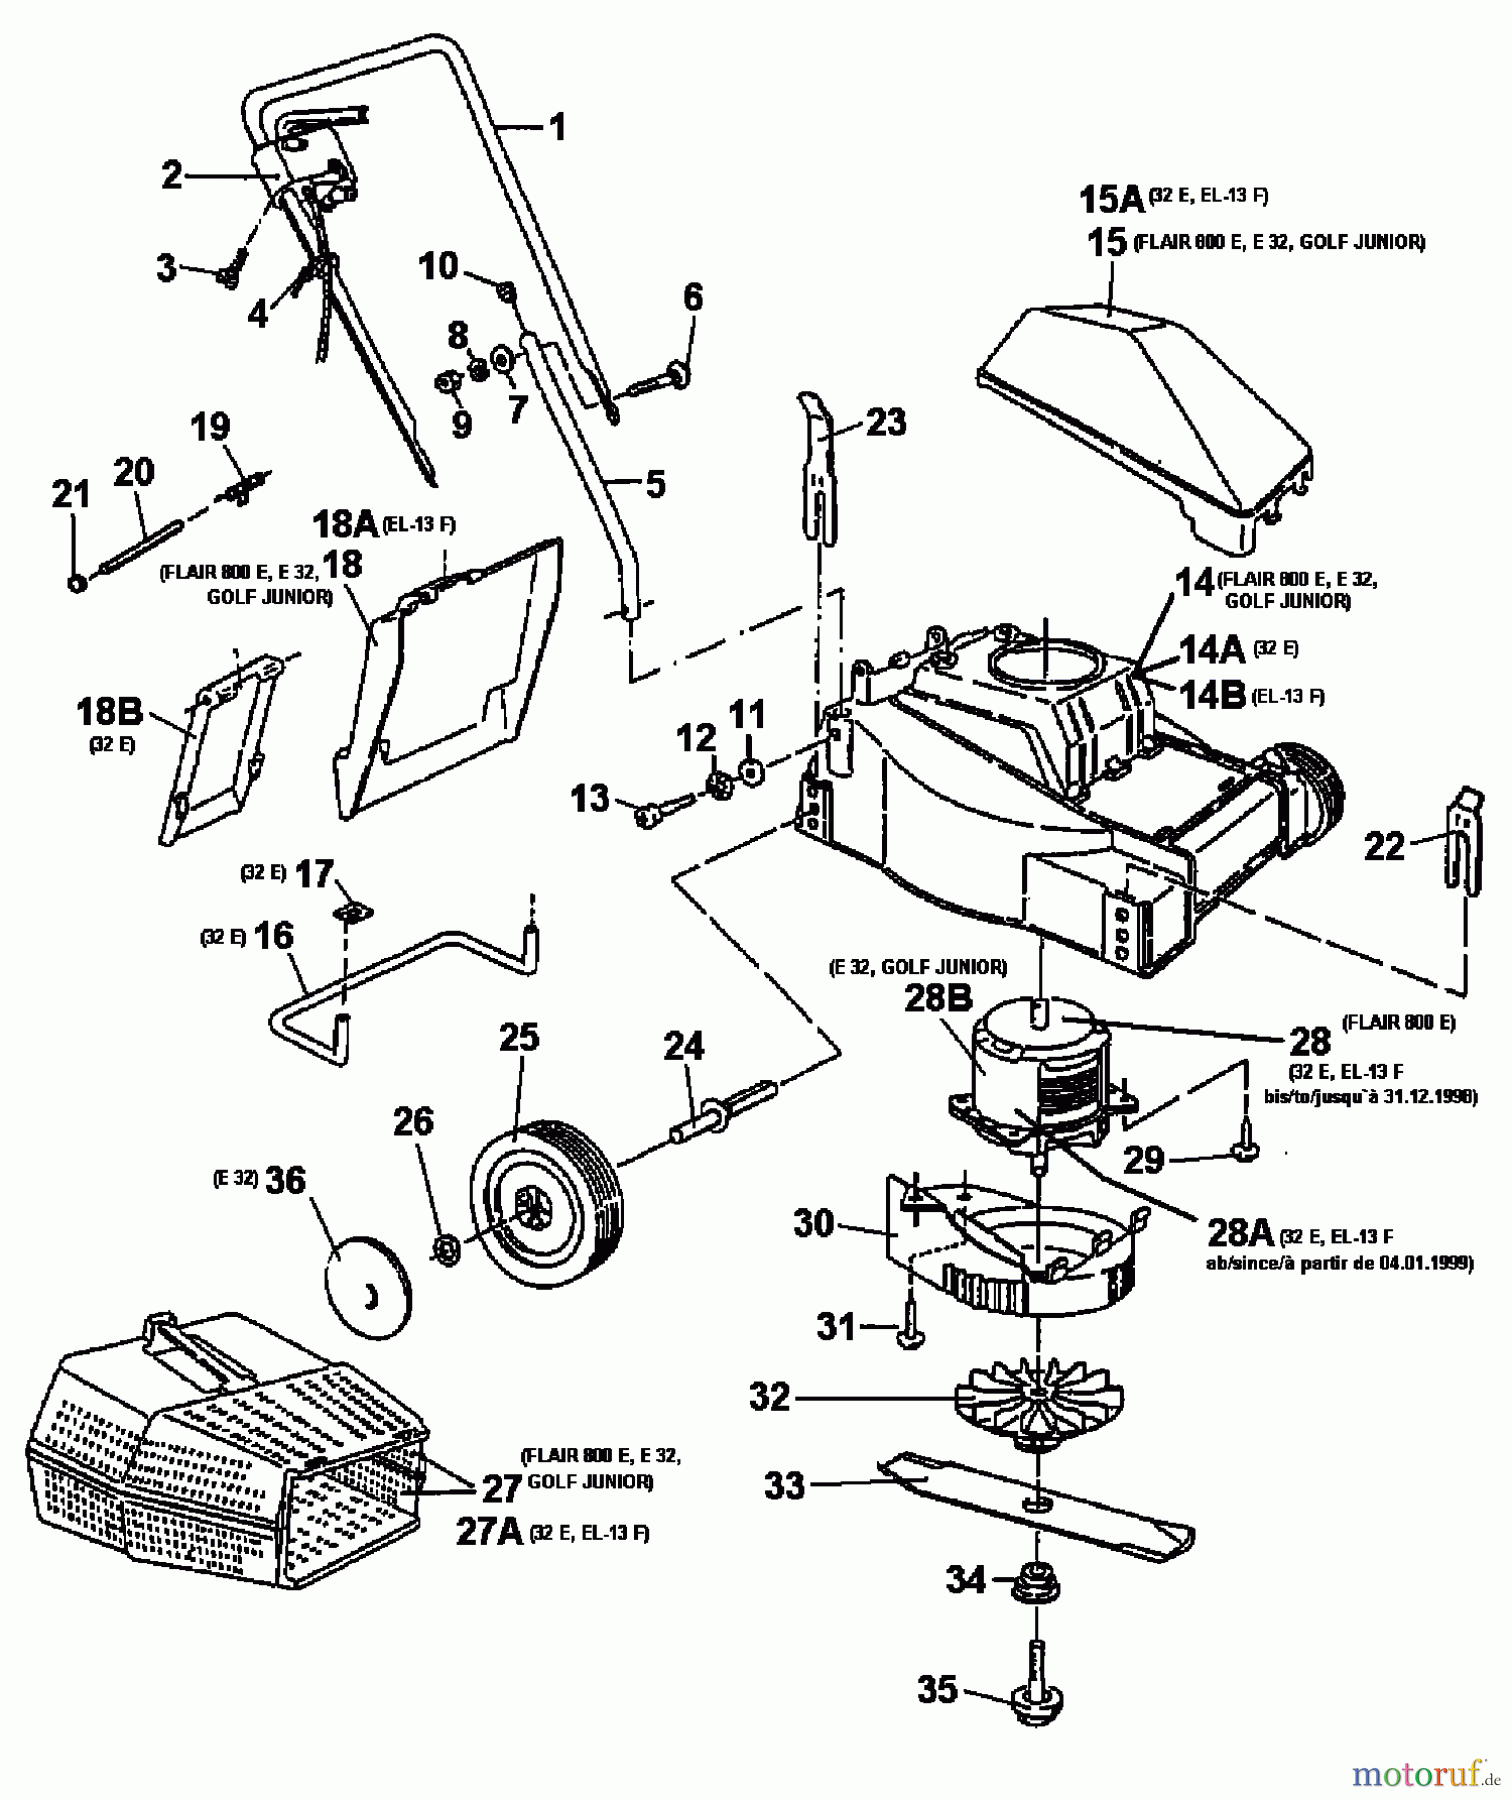  Golf Elektromäher Junior 18A-A3C-648  (1999) Grundgerät